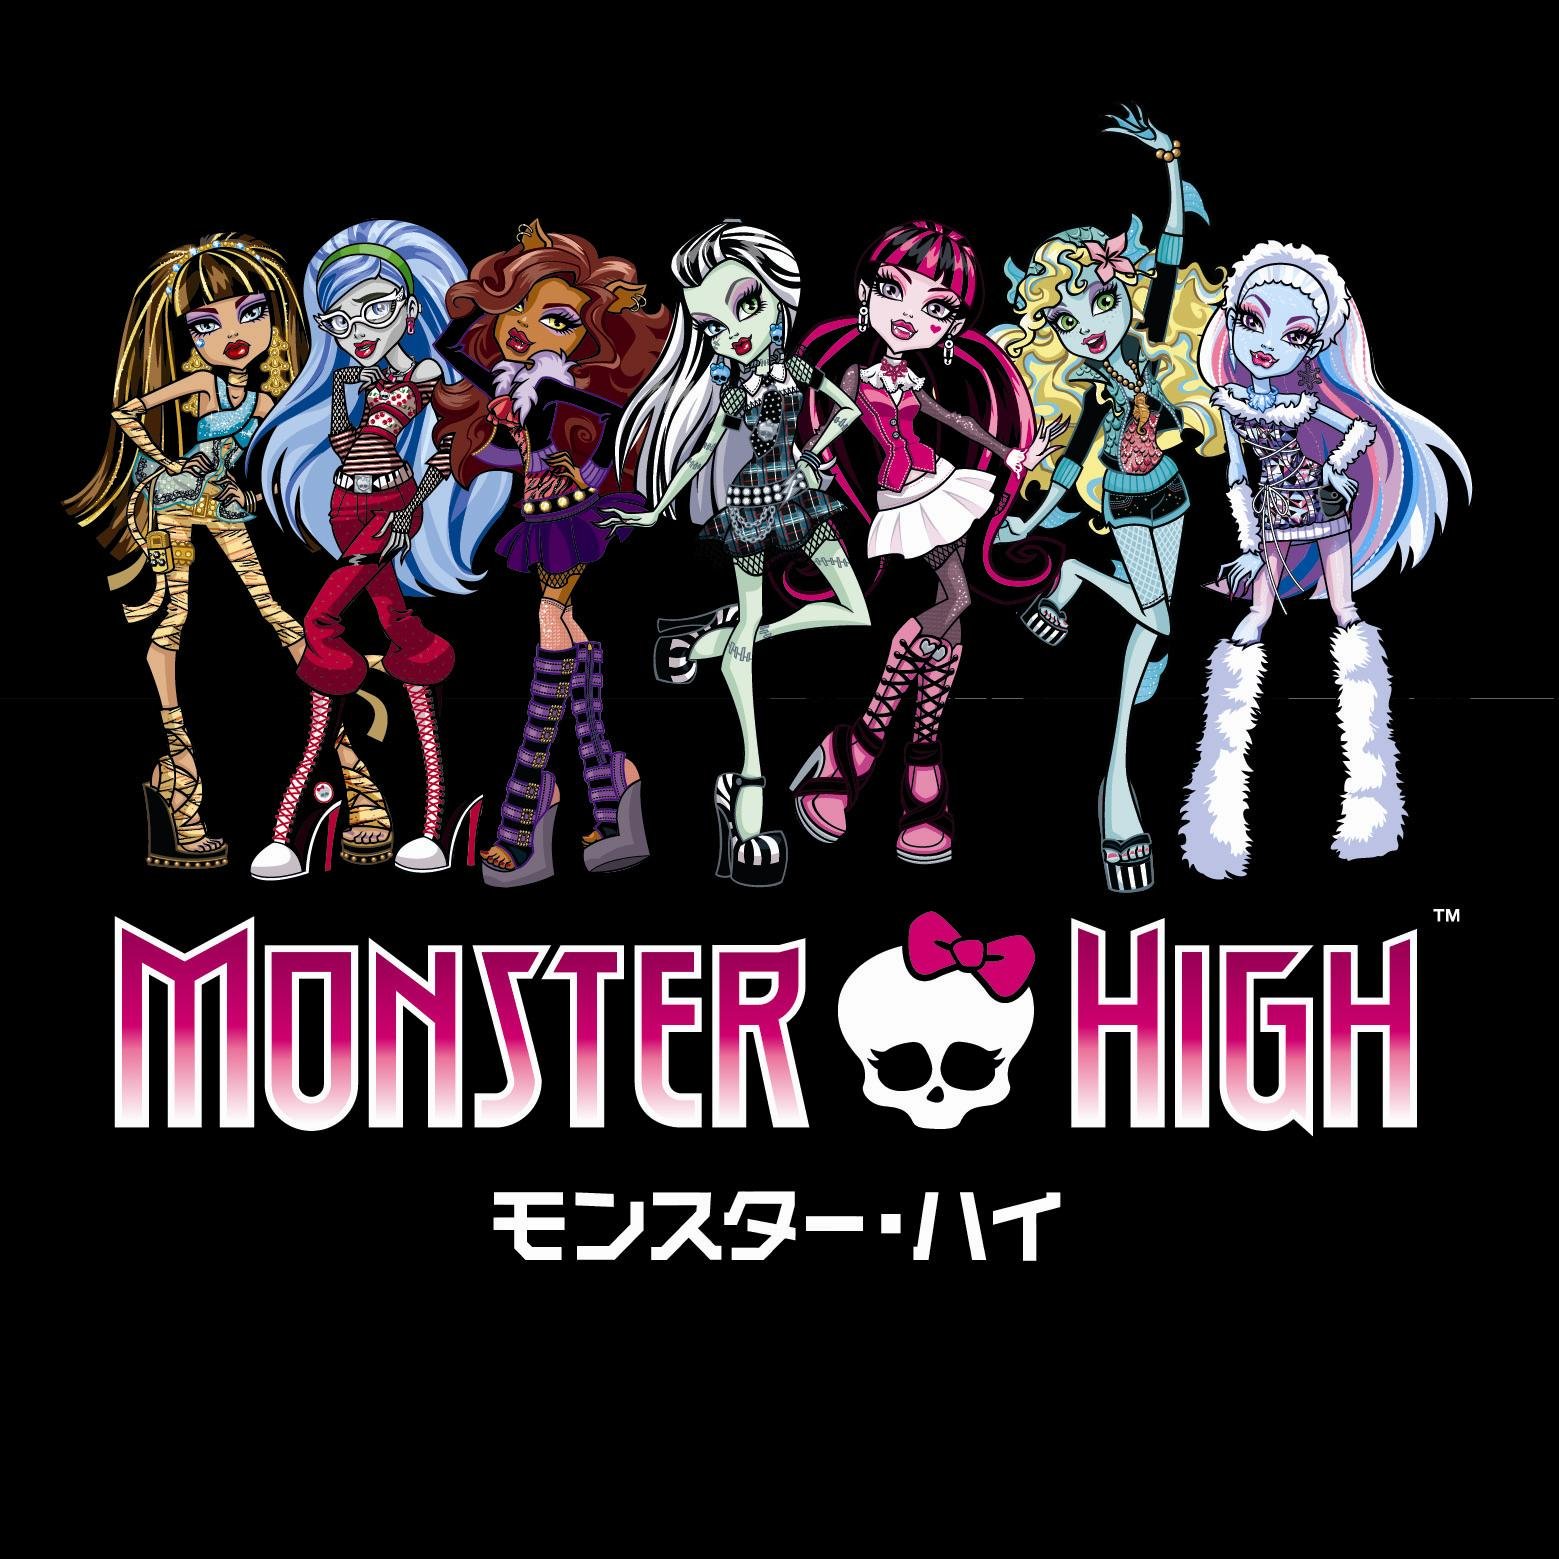 Monster High Travel Scaris Frankie Stein Doll